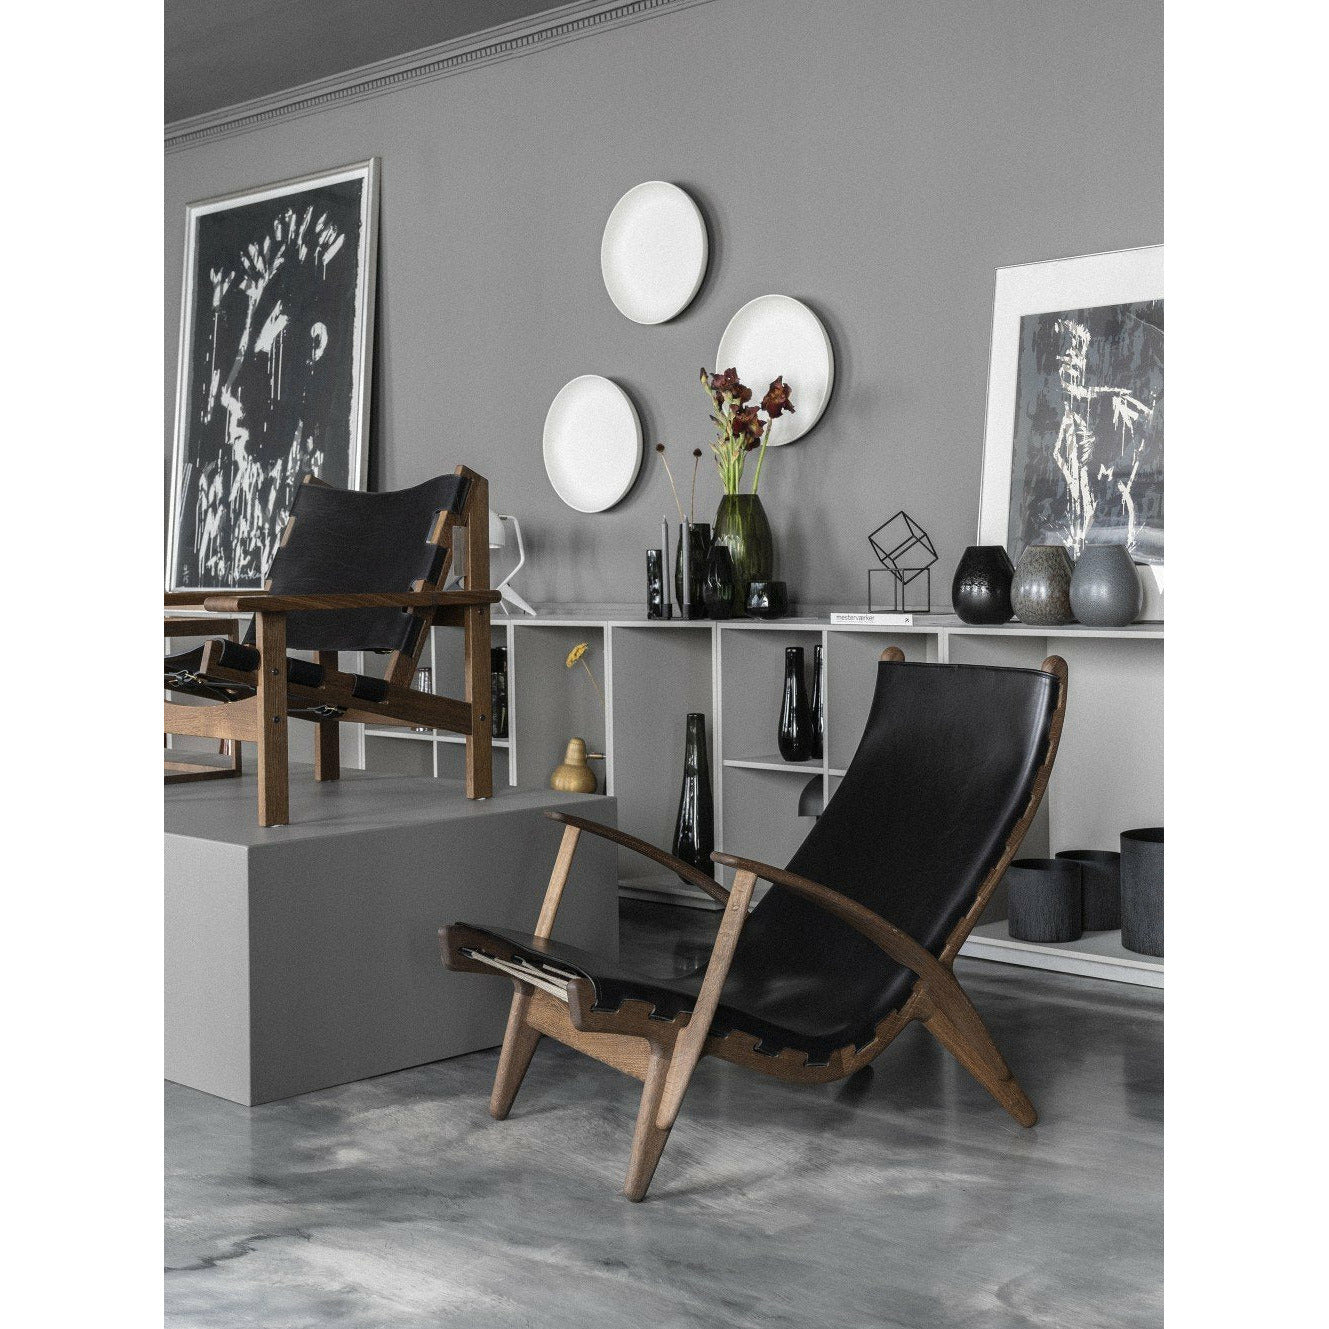 Klassik Studio PV King's stol svart ek färgad, svart läder